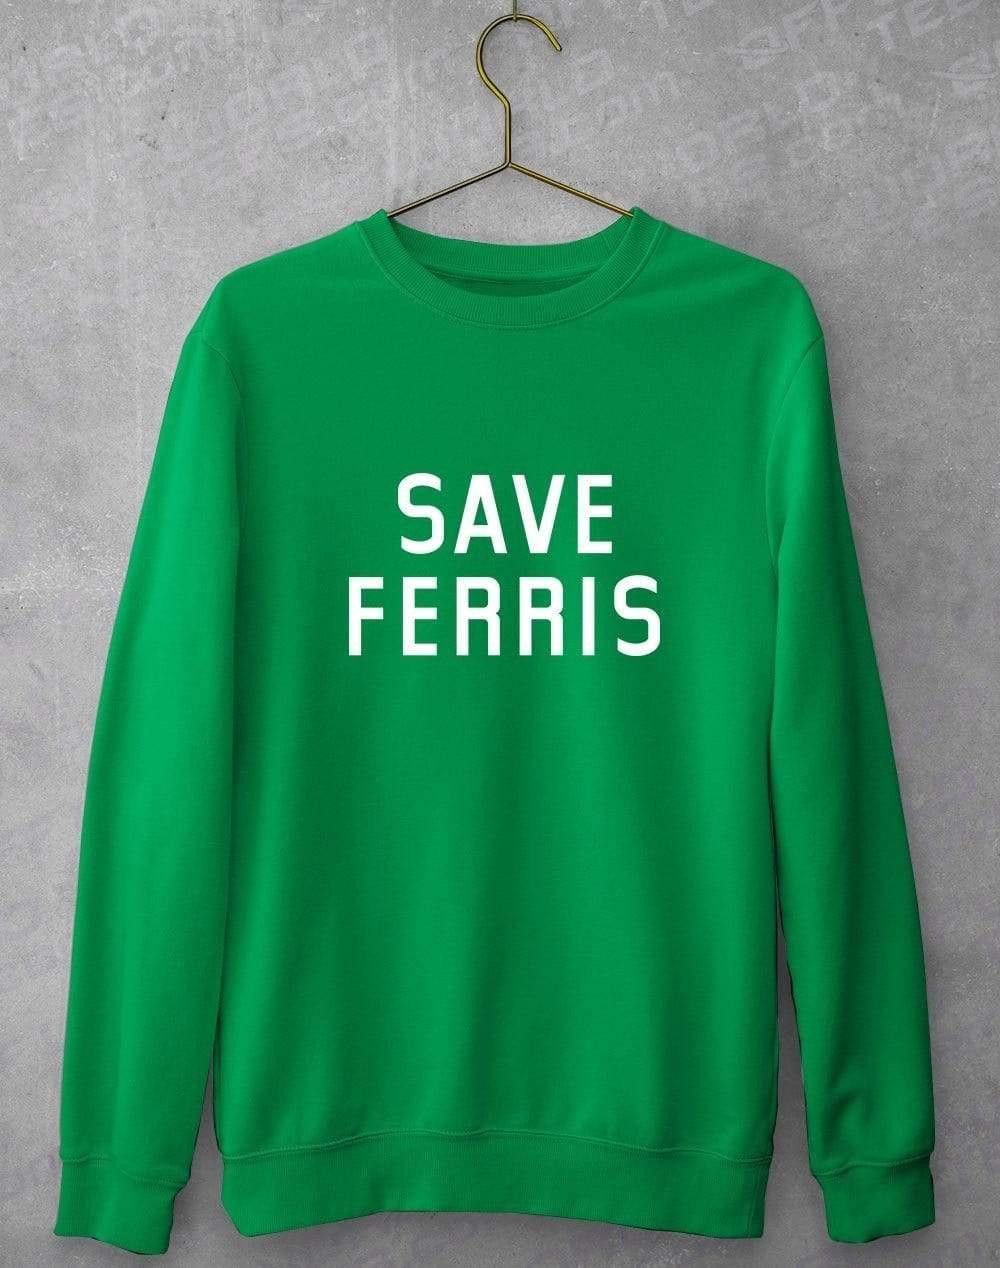 Save Ferris Sweatshirt S / Kelly Green  - Off World Tees